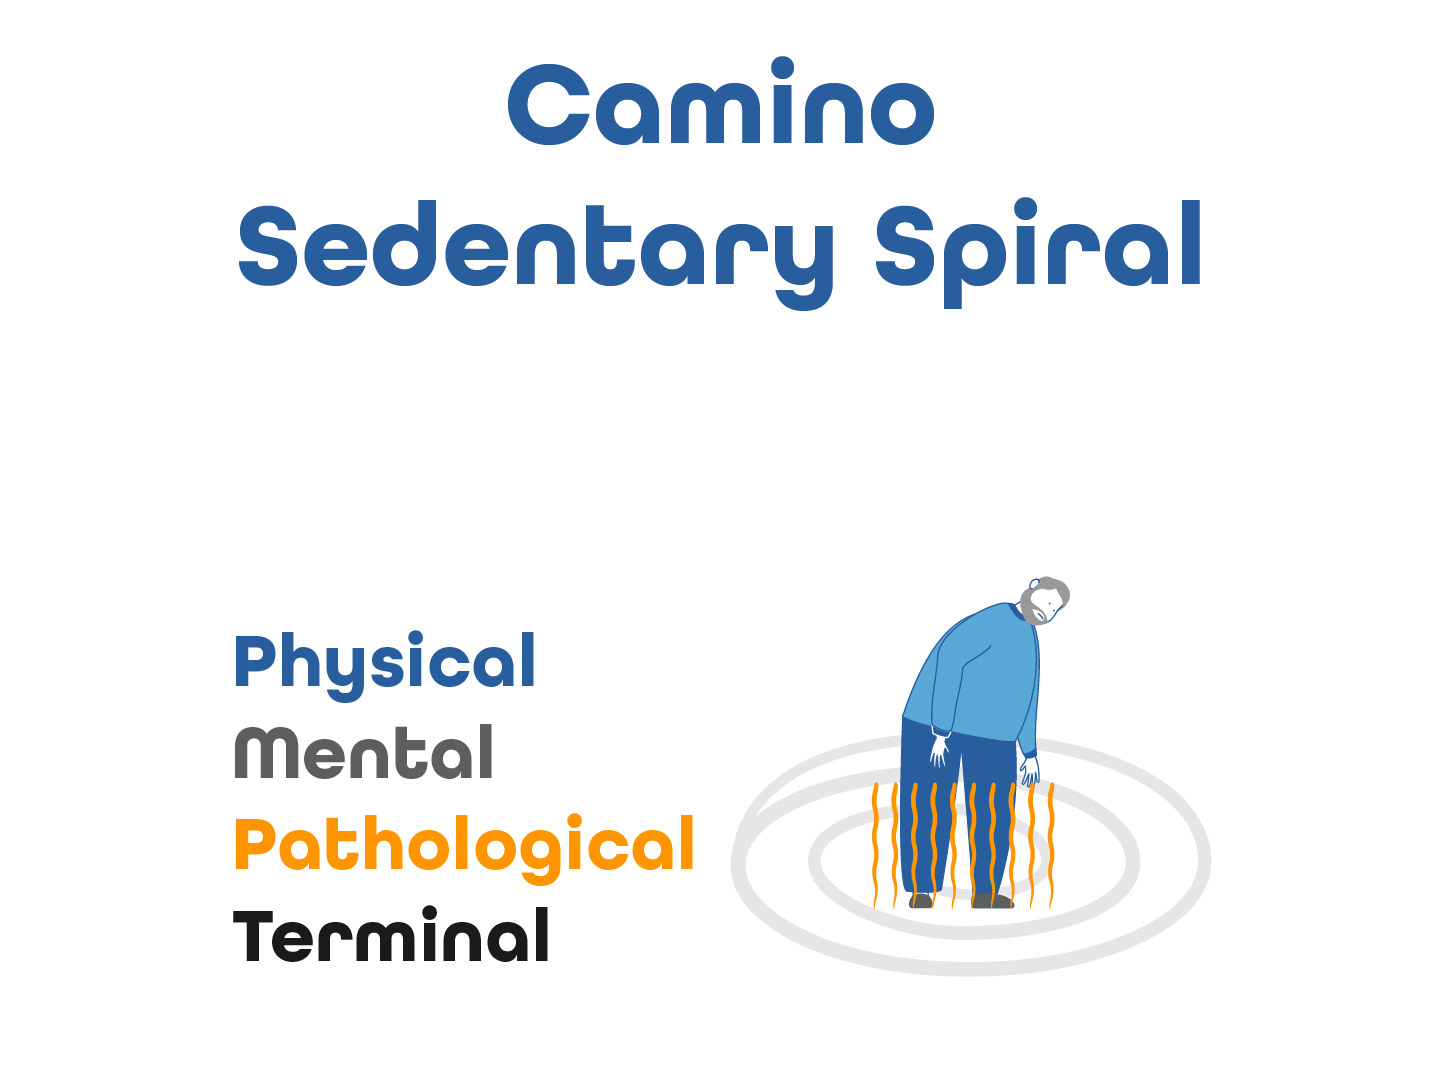 Camino Sendentary Spiral graphic